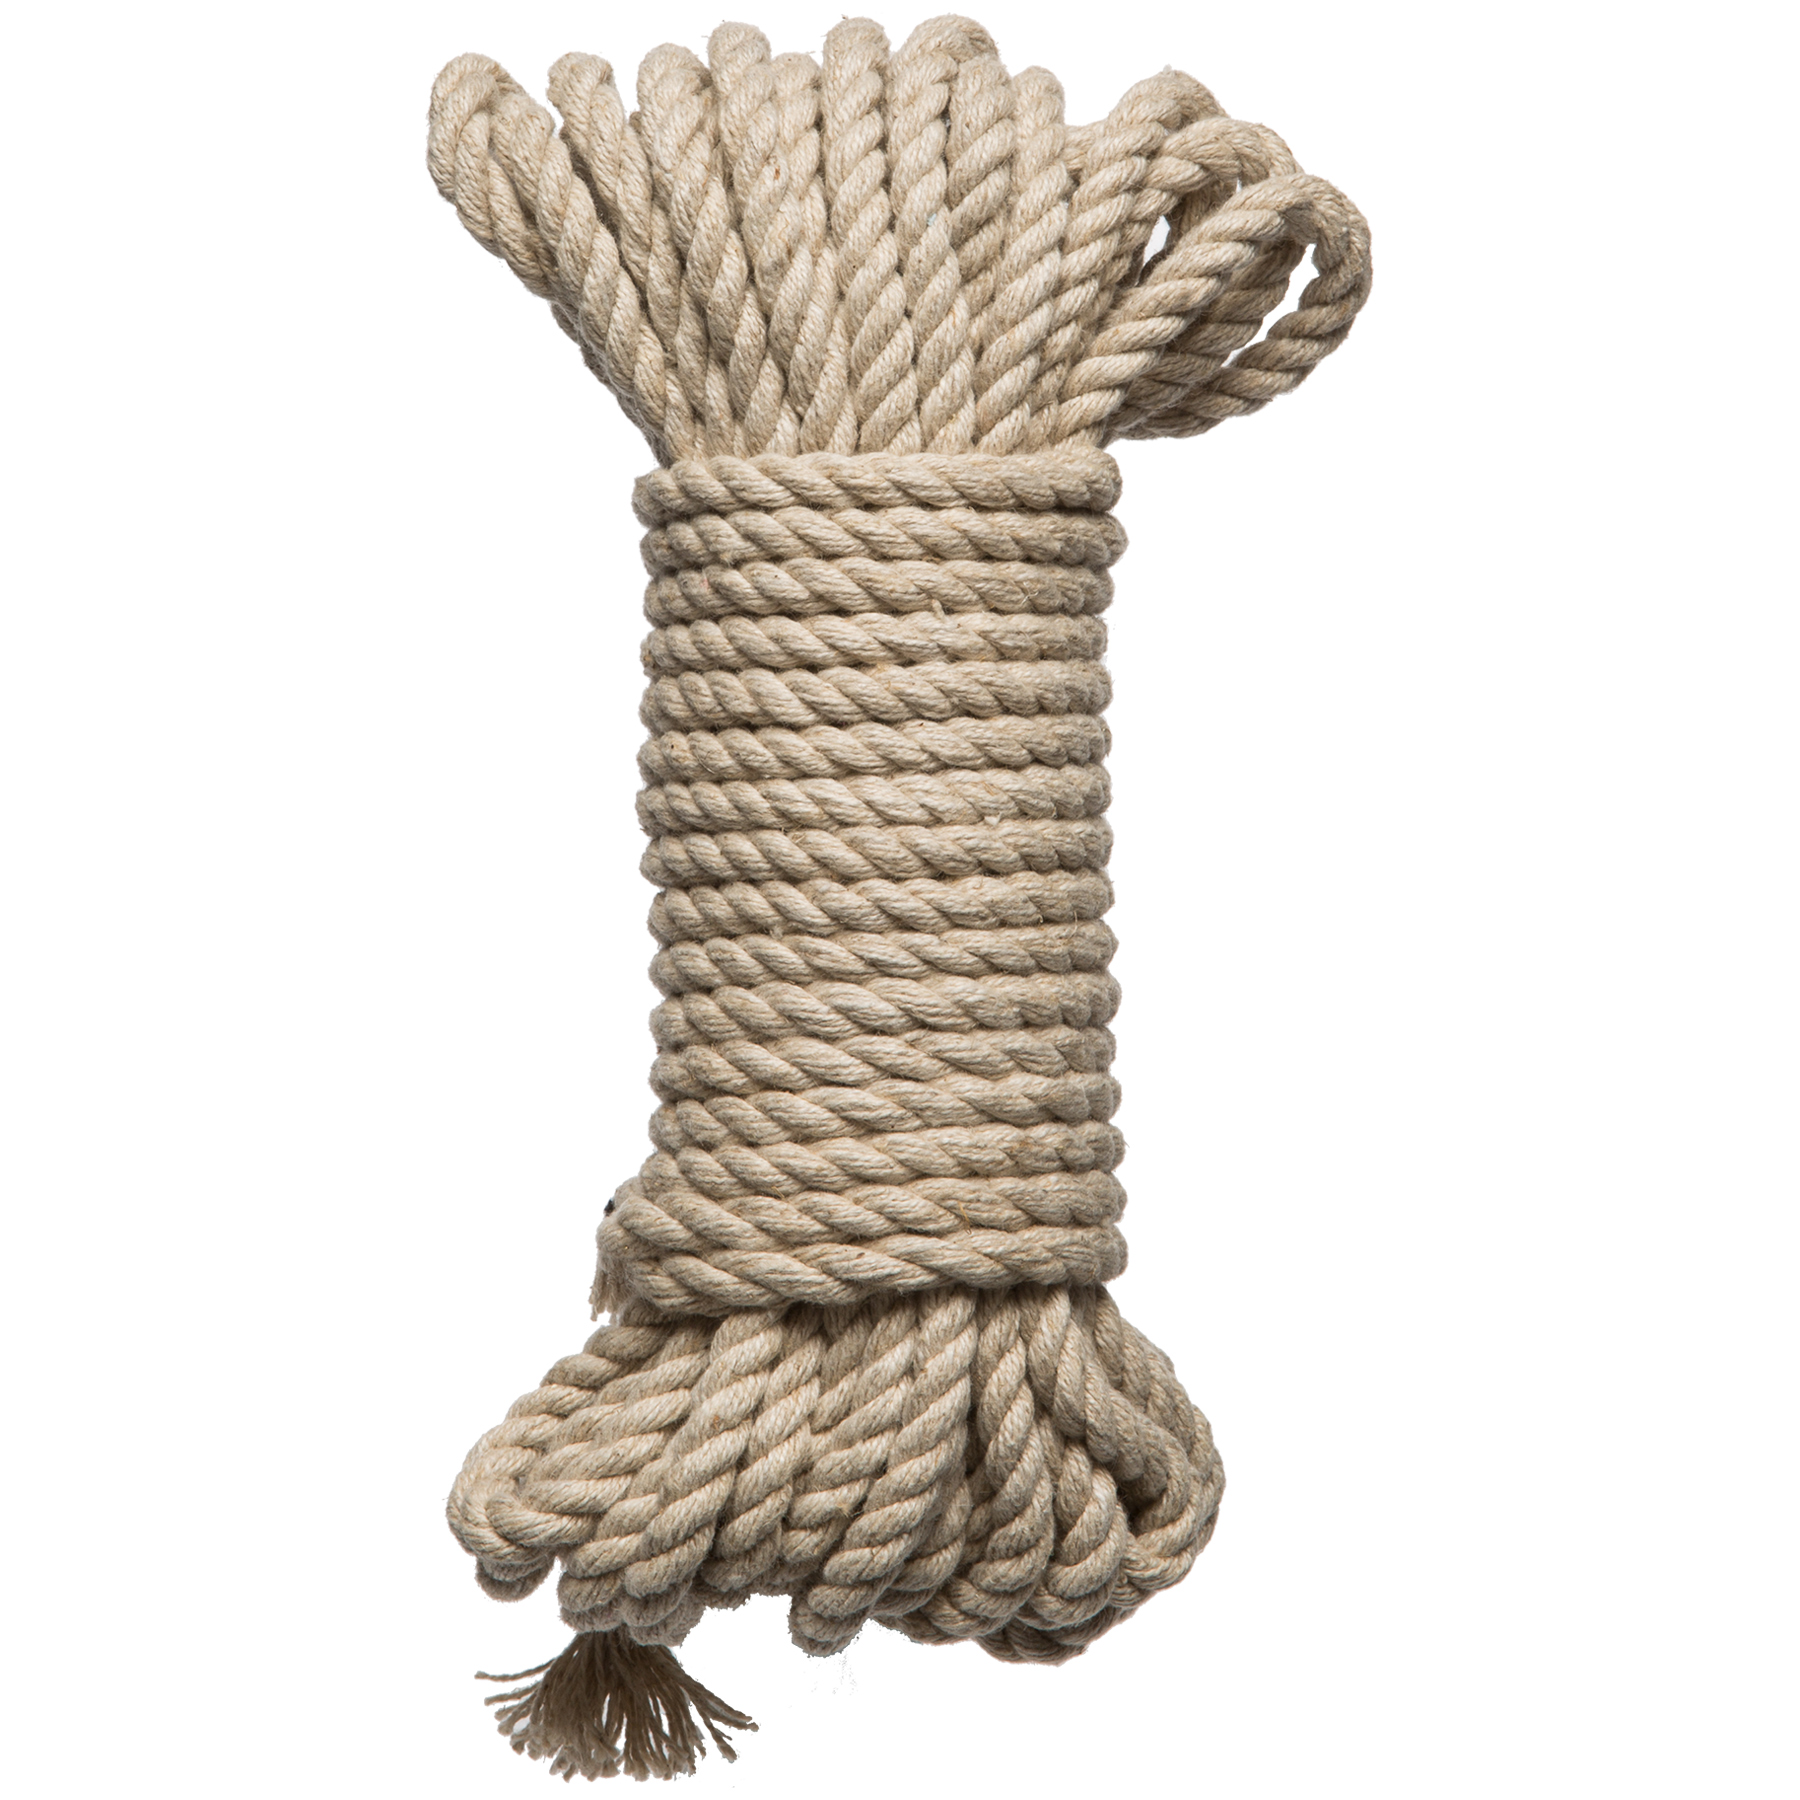 merci bind and tie mm hemp bondage rope   feet natural 